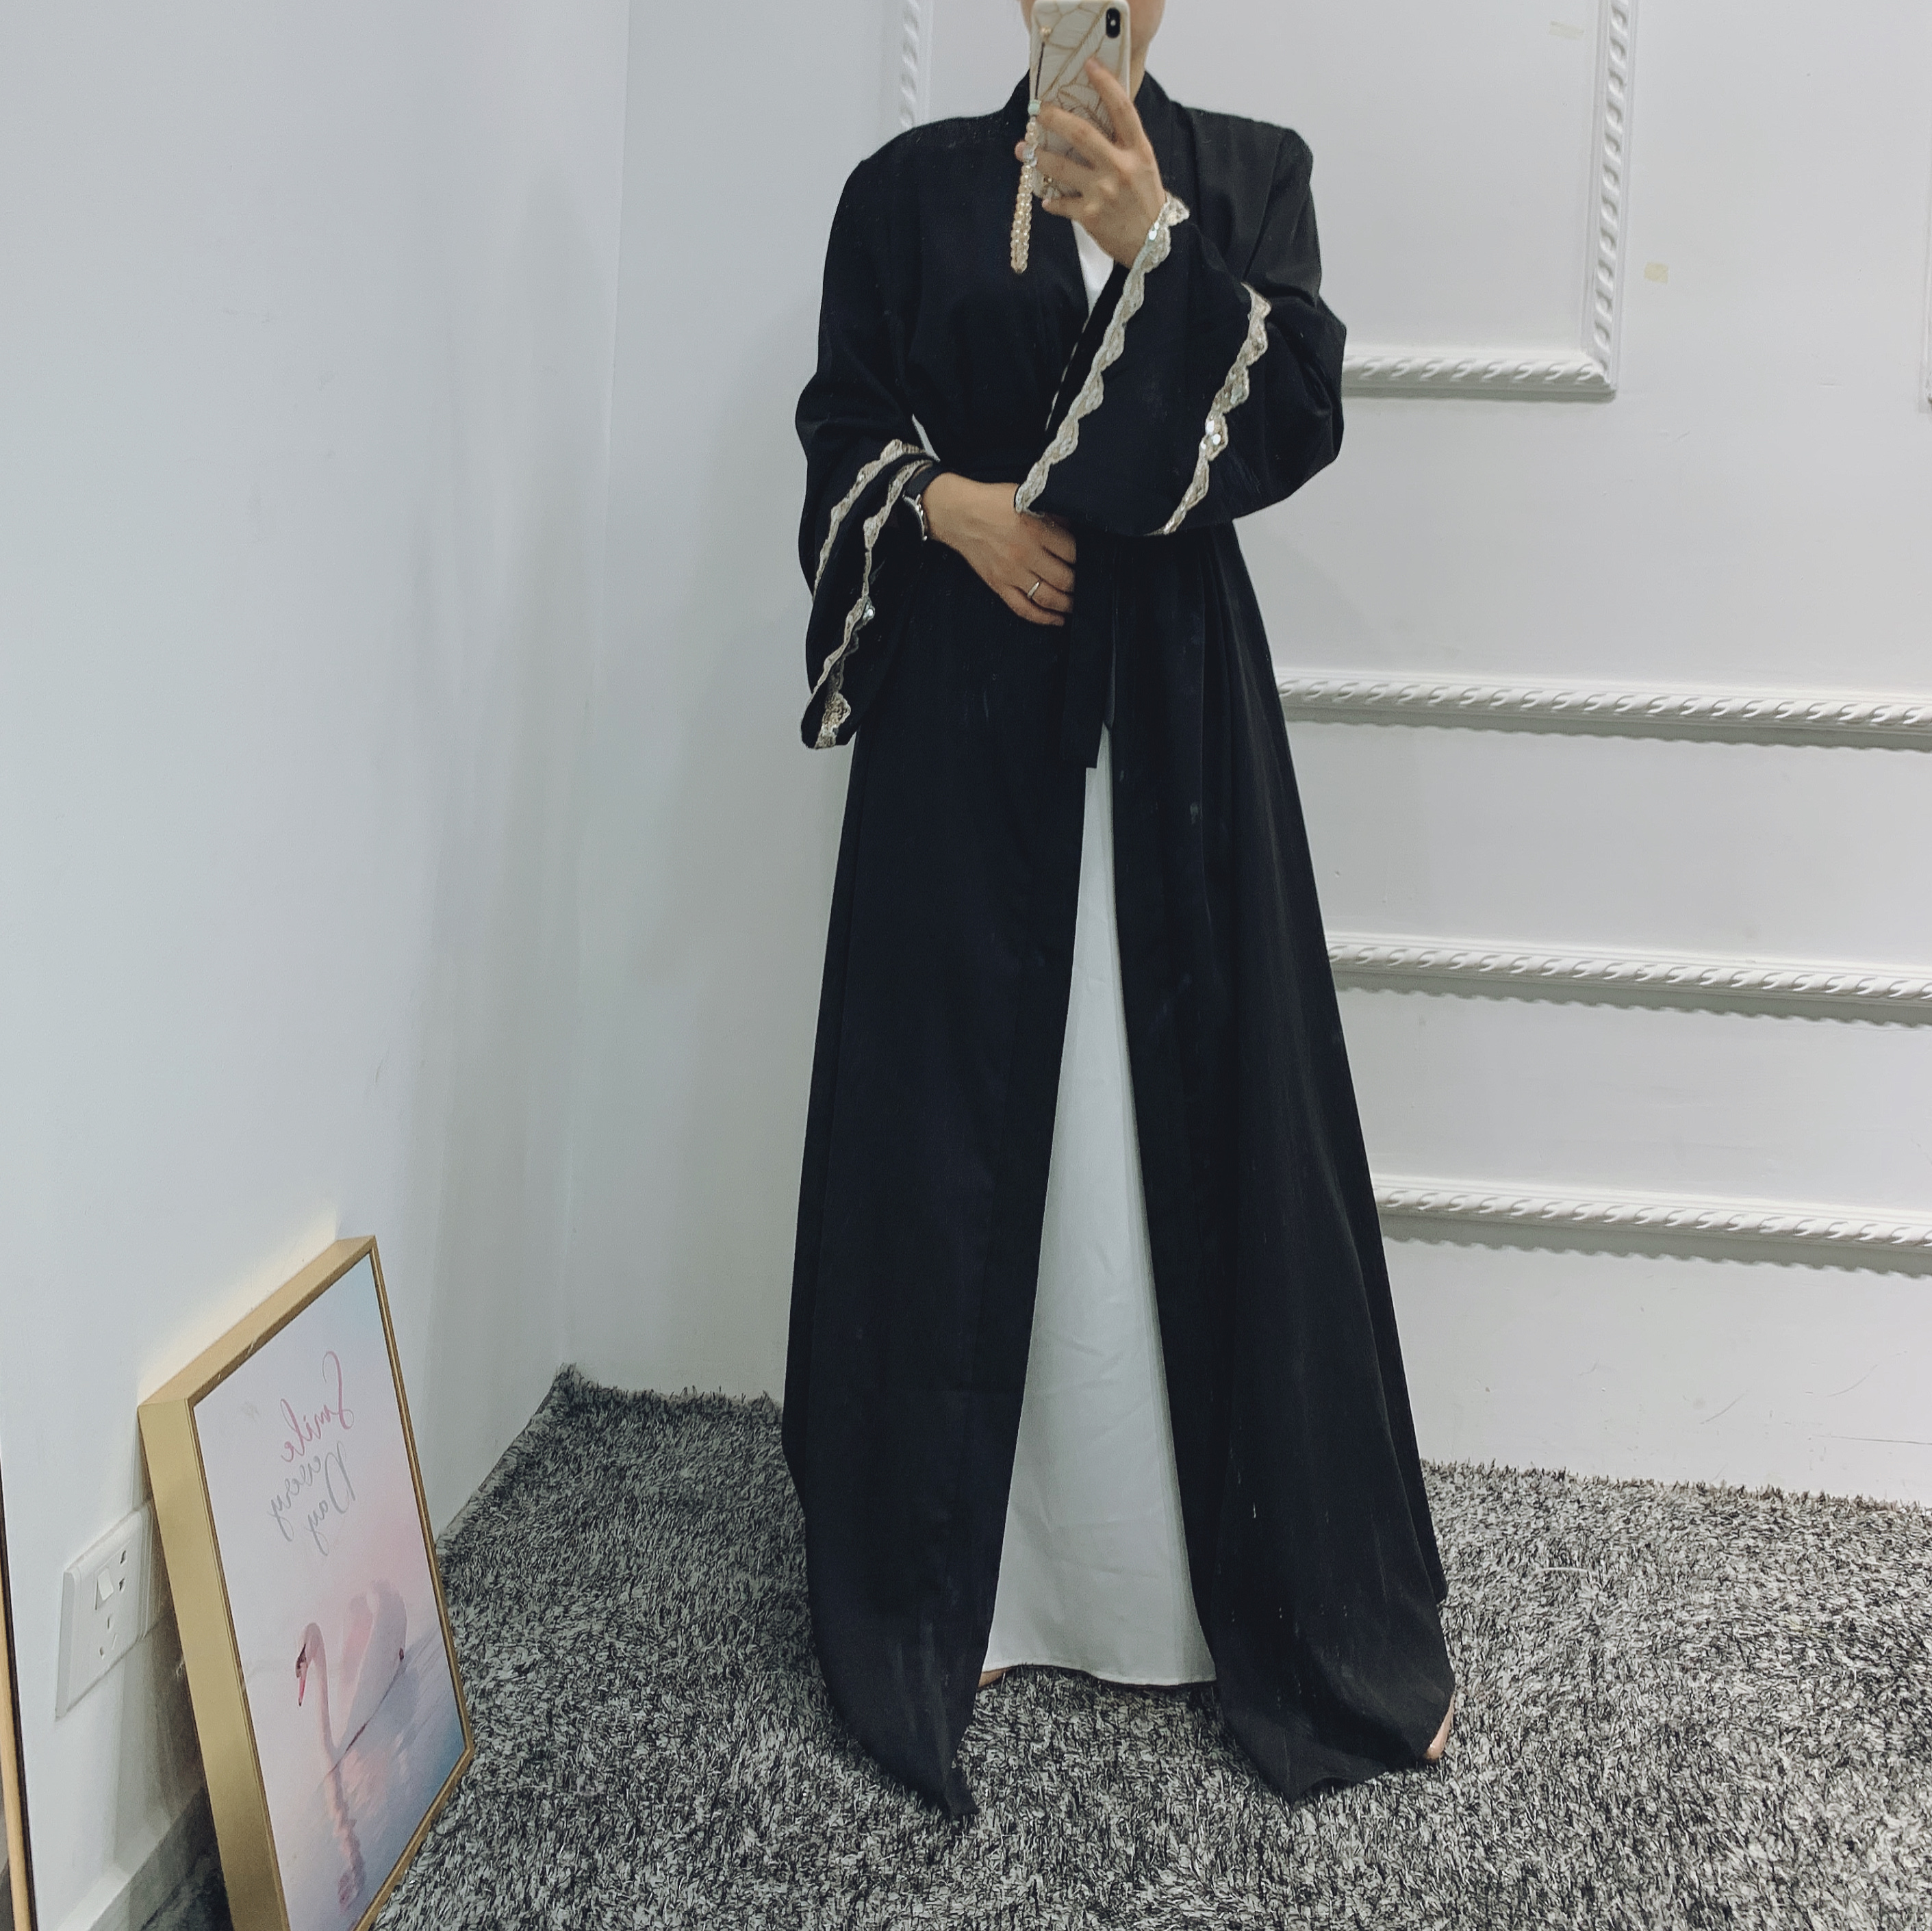 Wholesale 7 Solid Colors Turkey Dubai Muslim Dresses 3 Layers Simple Chiffon Open Abaya Islamic Clothing